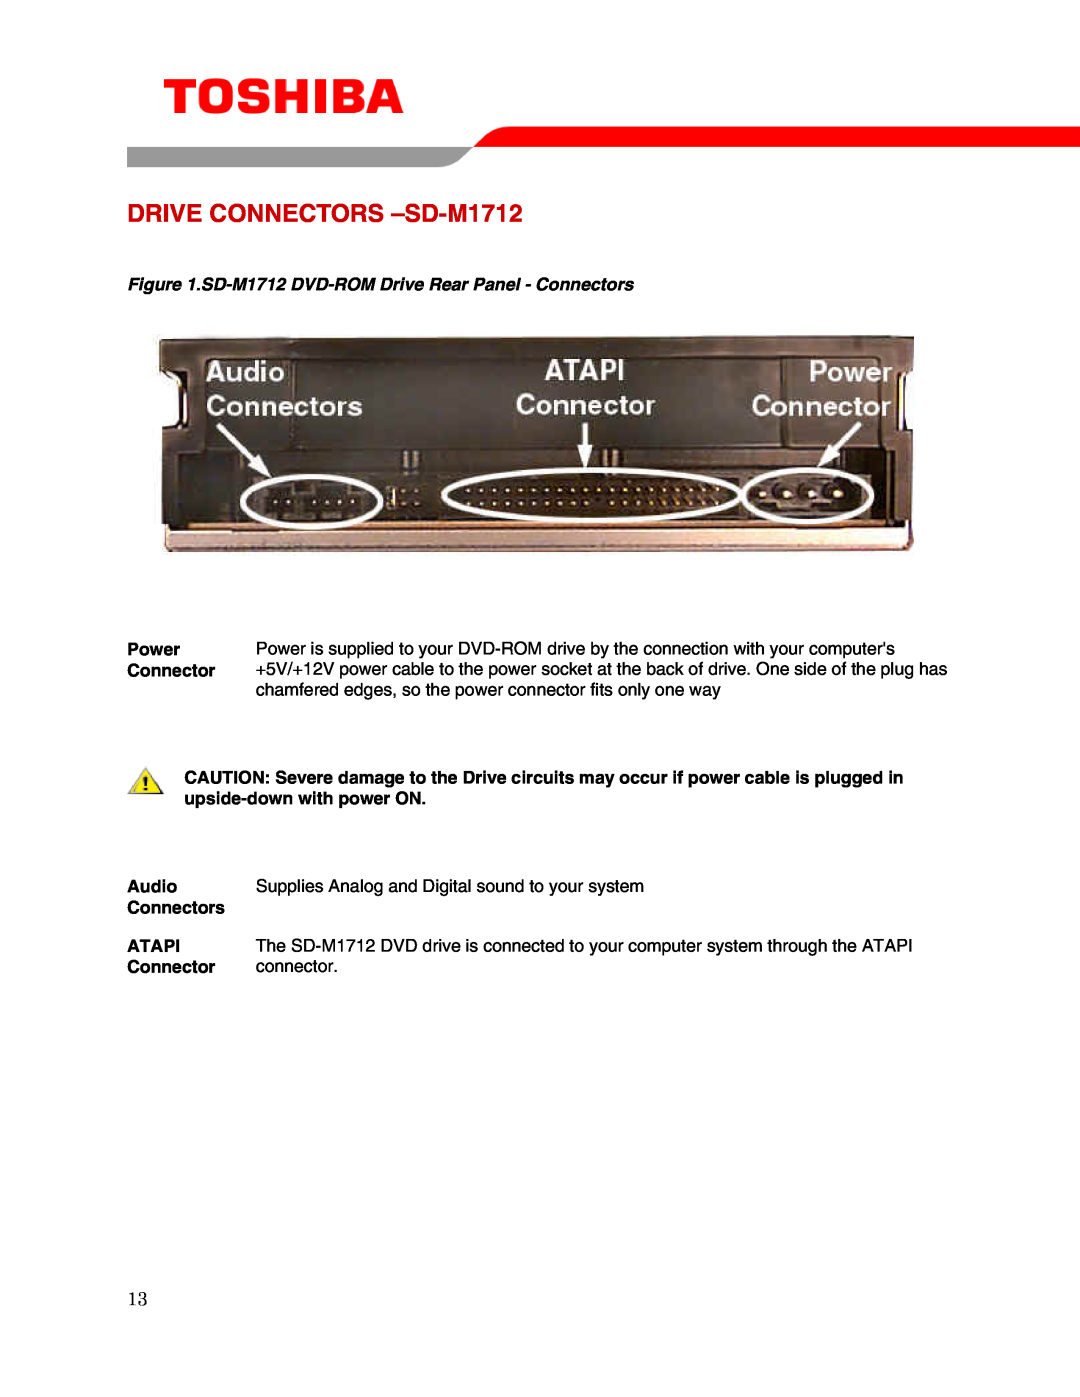 Toshiba user manual DRIVE CONNECTORS -SD-M1712, SD-M1712 DVD-ROM Drive Rear Panel - Connectors, Atapi, Power, Audio 